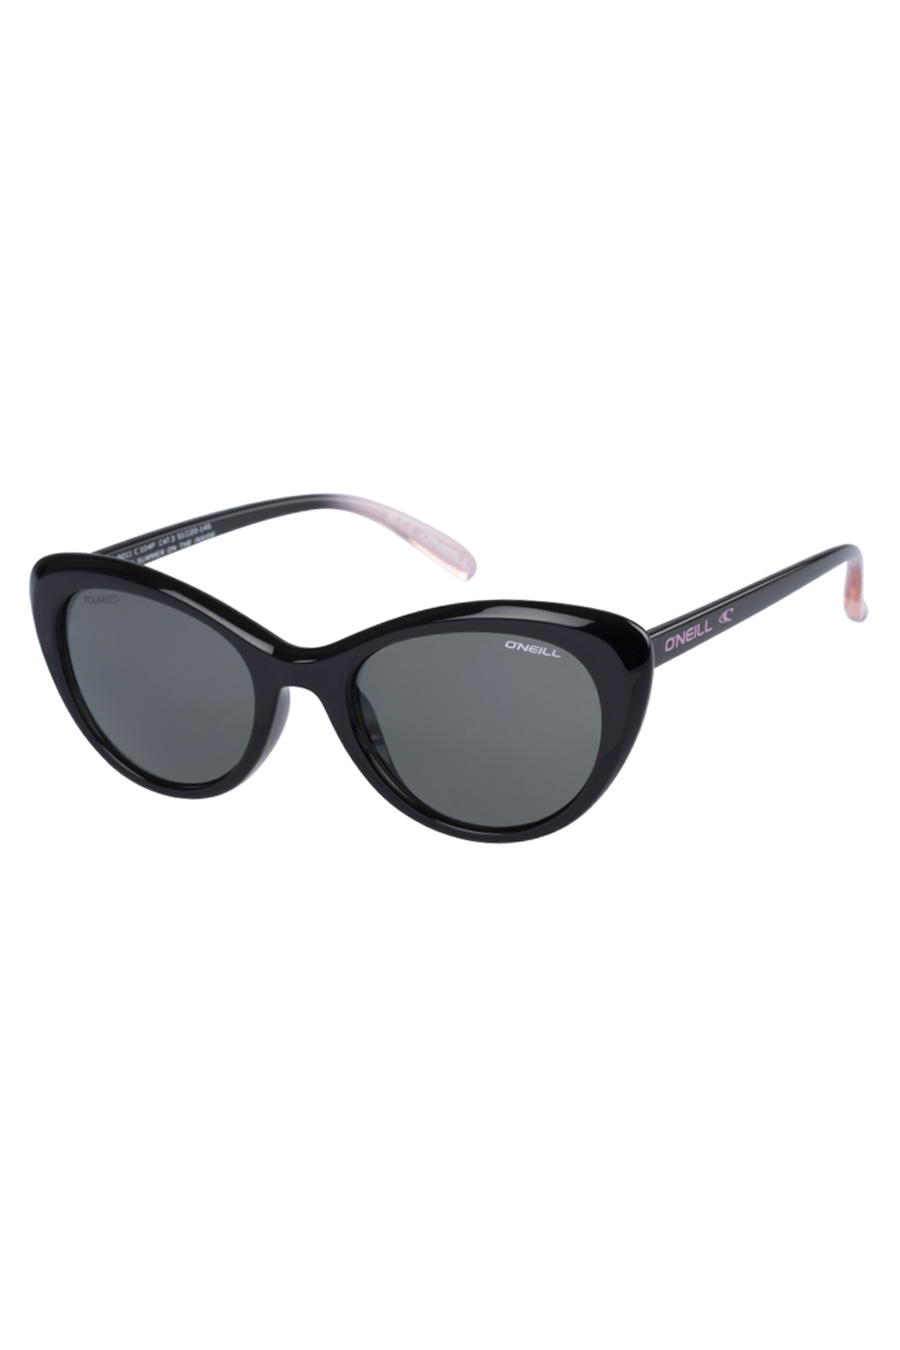 Солнечные очки ONEILL ONS-9011-20-104P